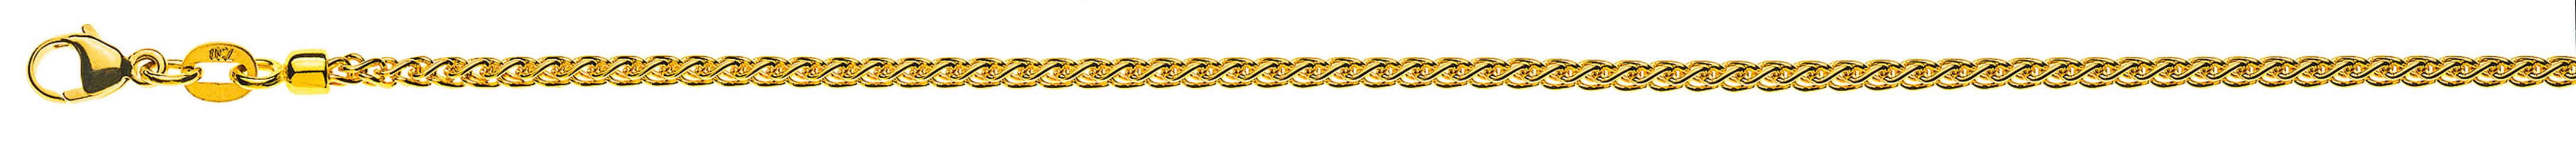 AURONOS Prestige Necklace yellow gold 18K cable chain 45cm 2.15mm